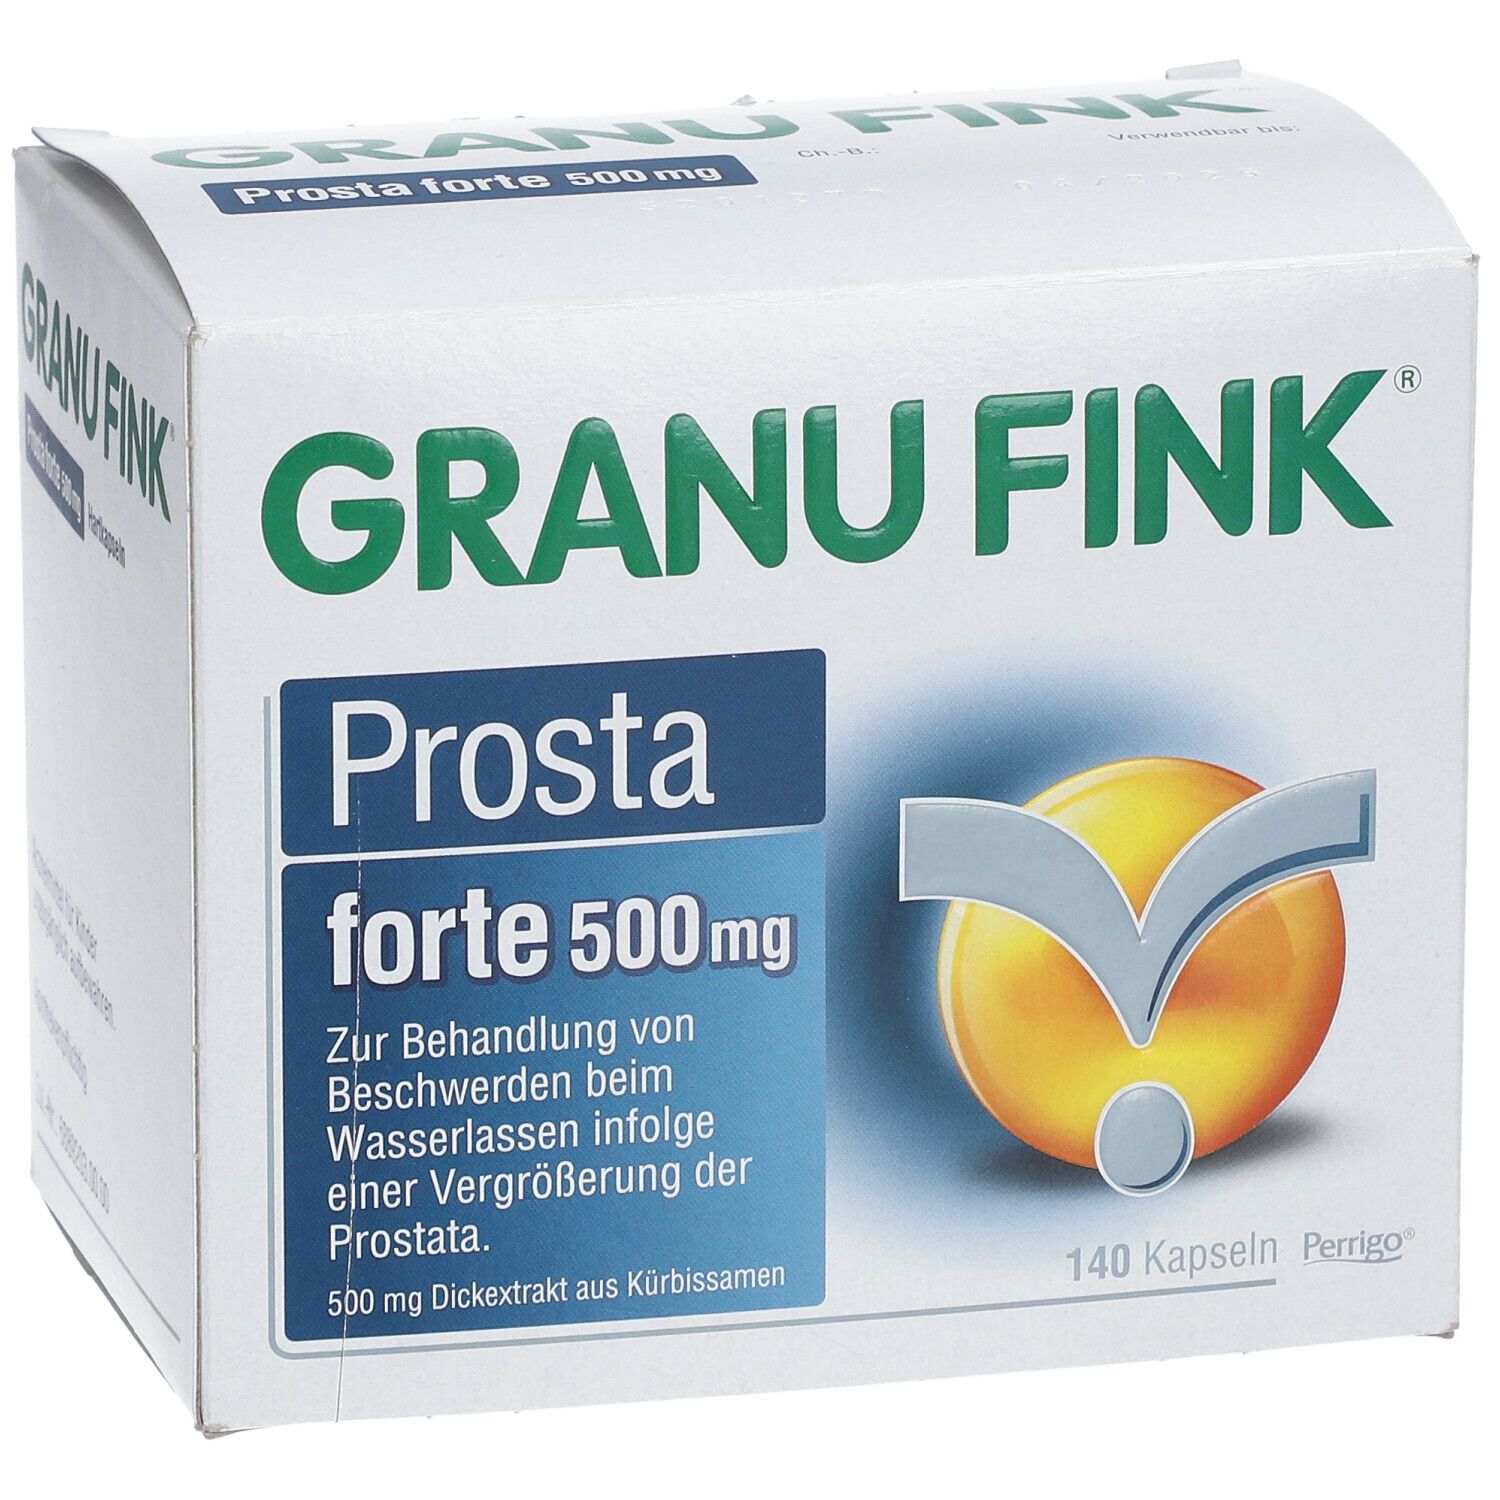 GRANU FINK® Prosta forte 500 mg – Jetzt 7€ Cashback sichern